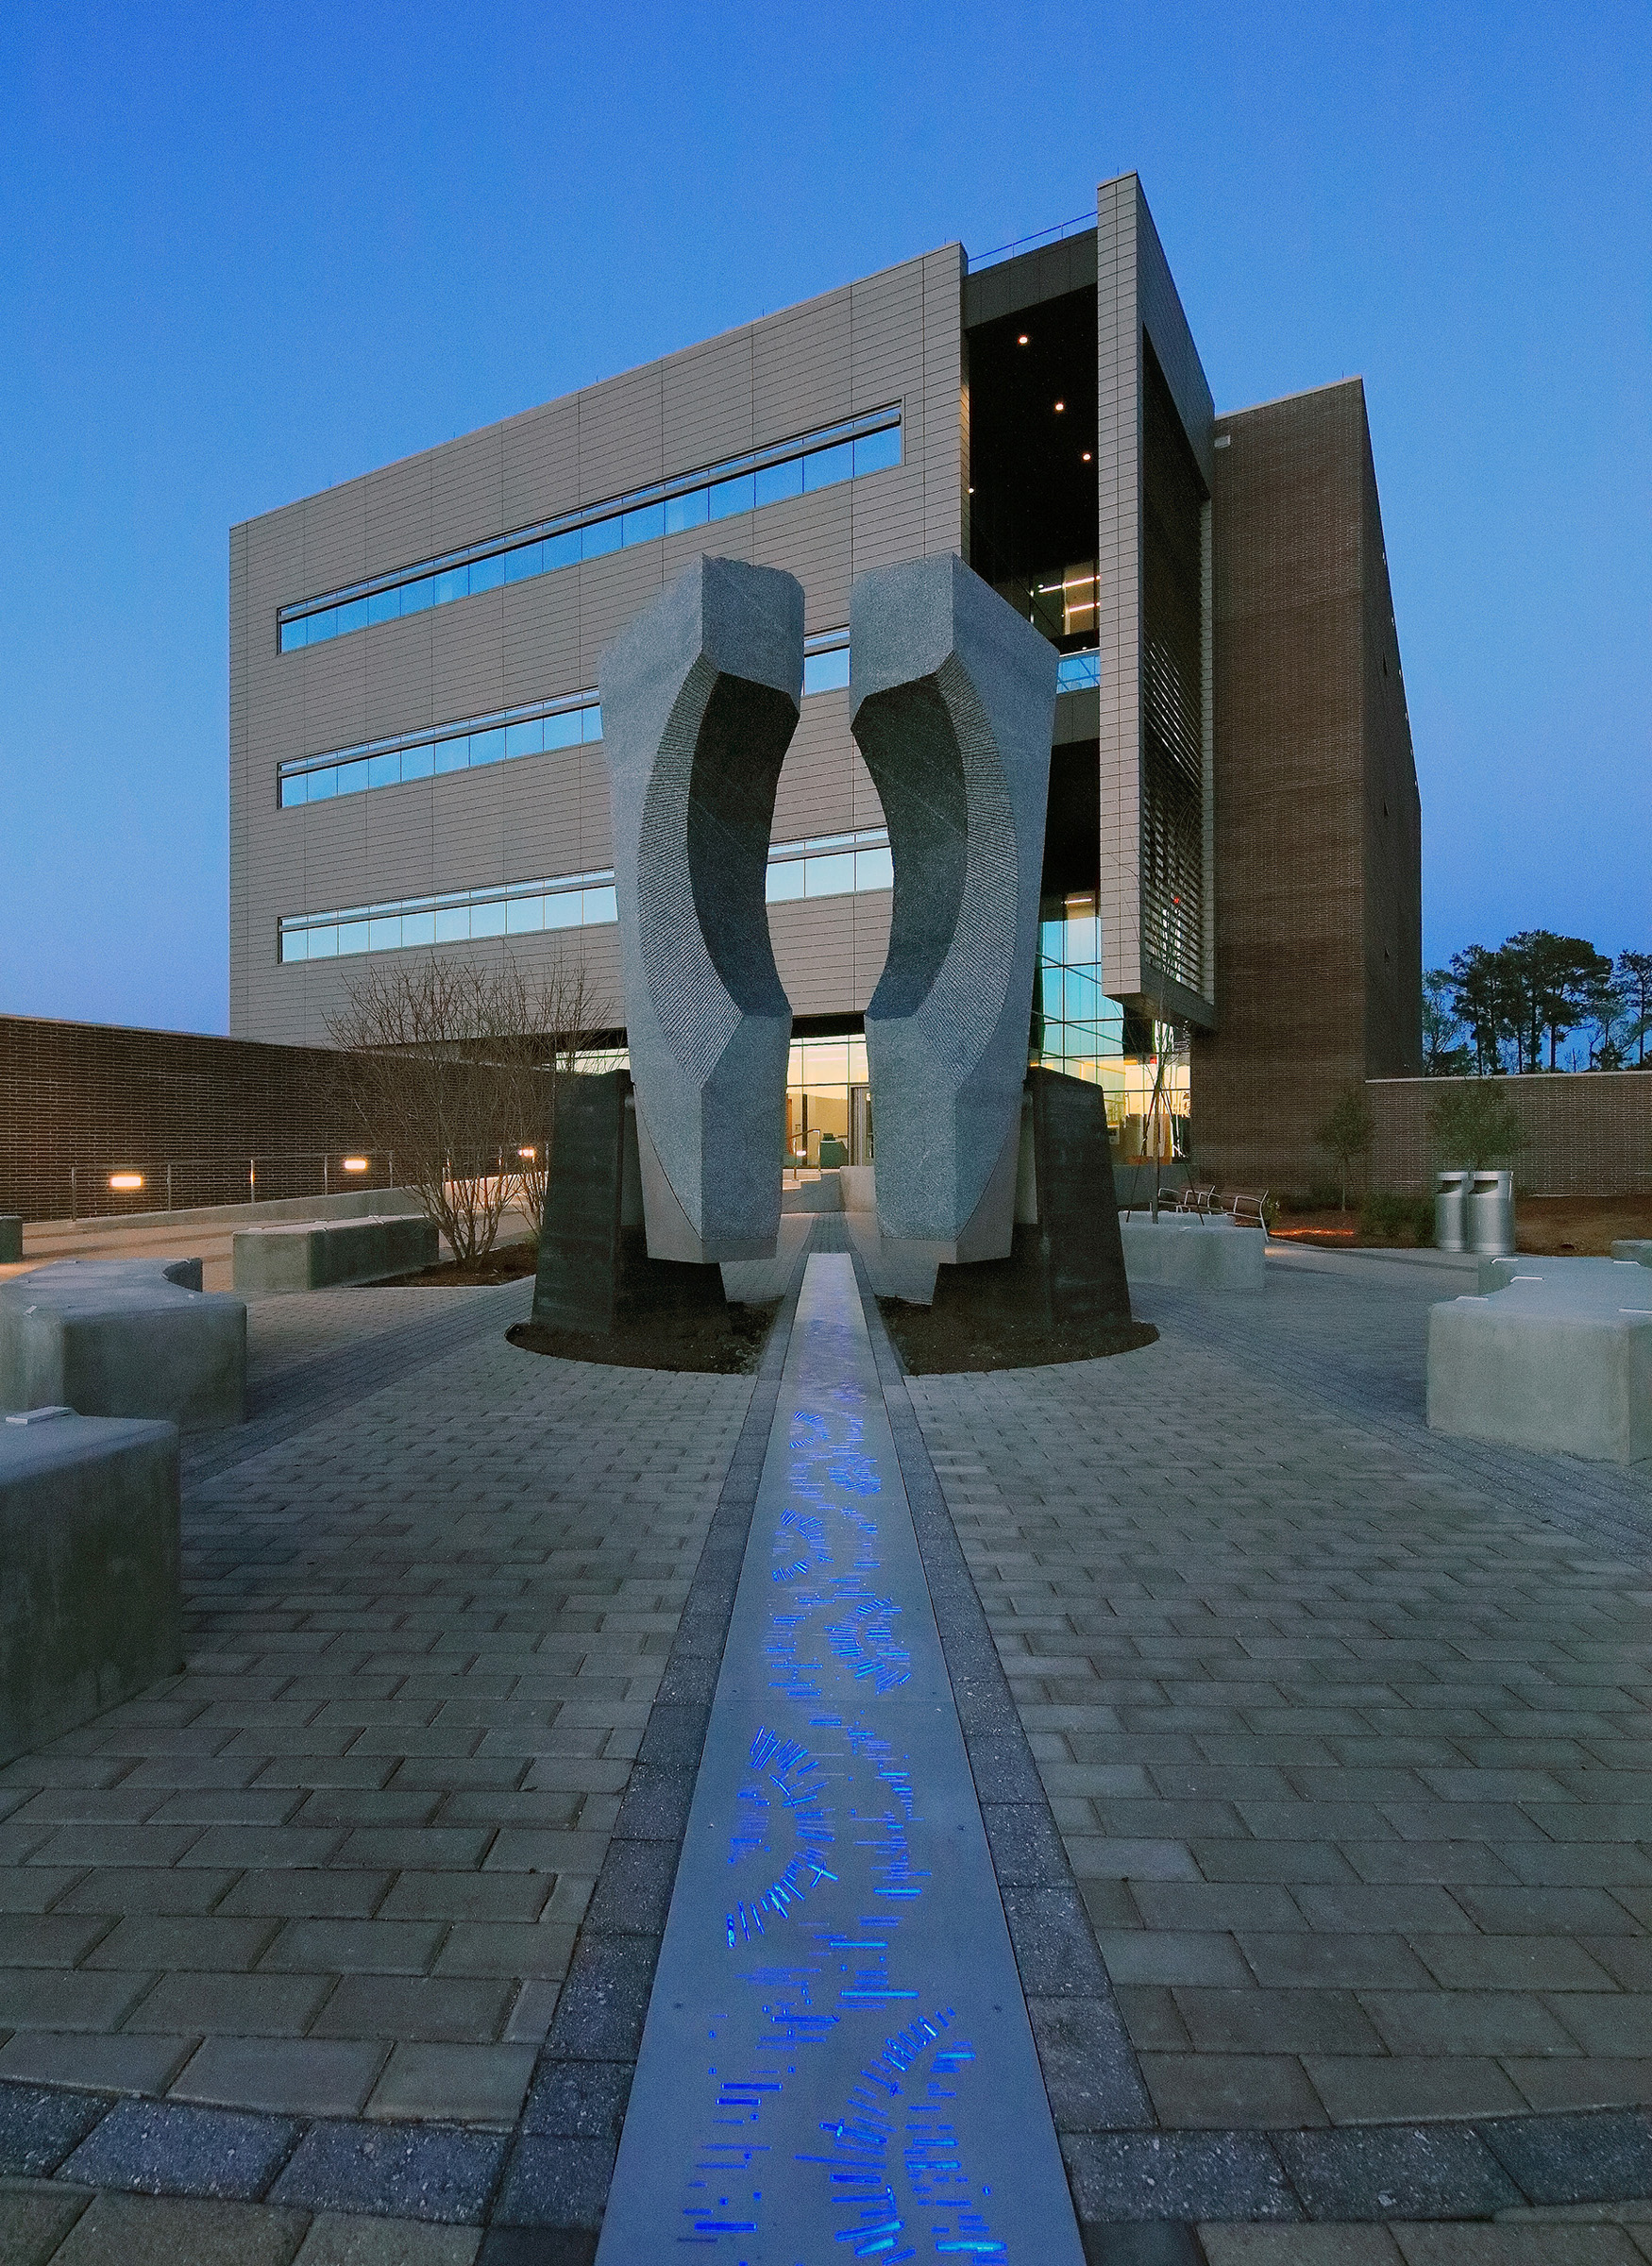 Central Communications Center in Raleigh, North Carolina; Architect: Clark Nexsen